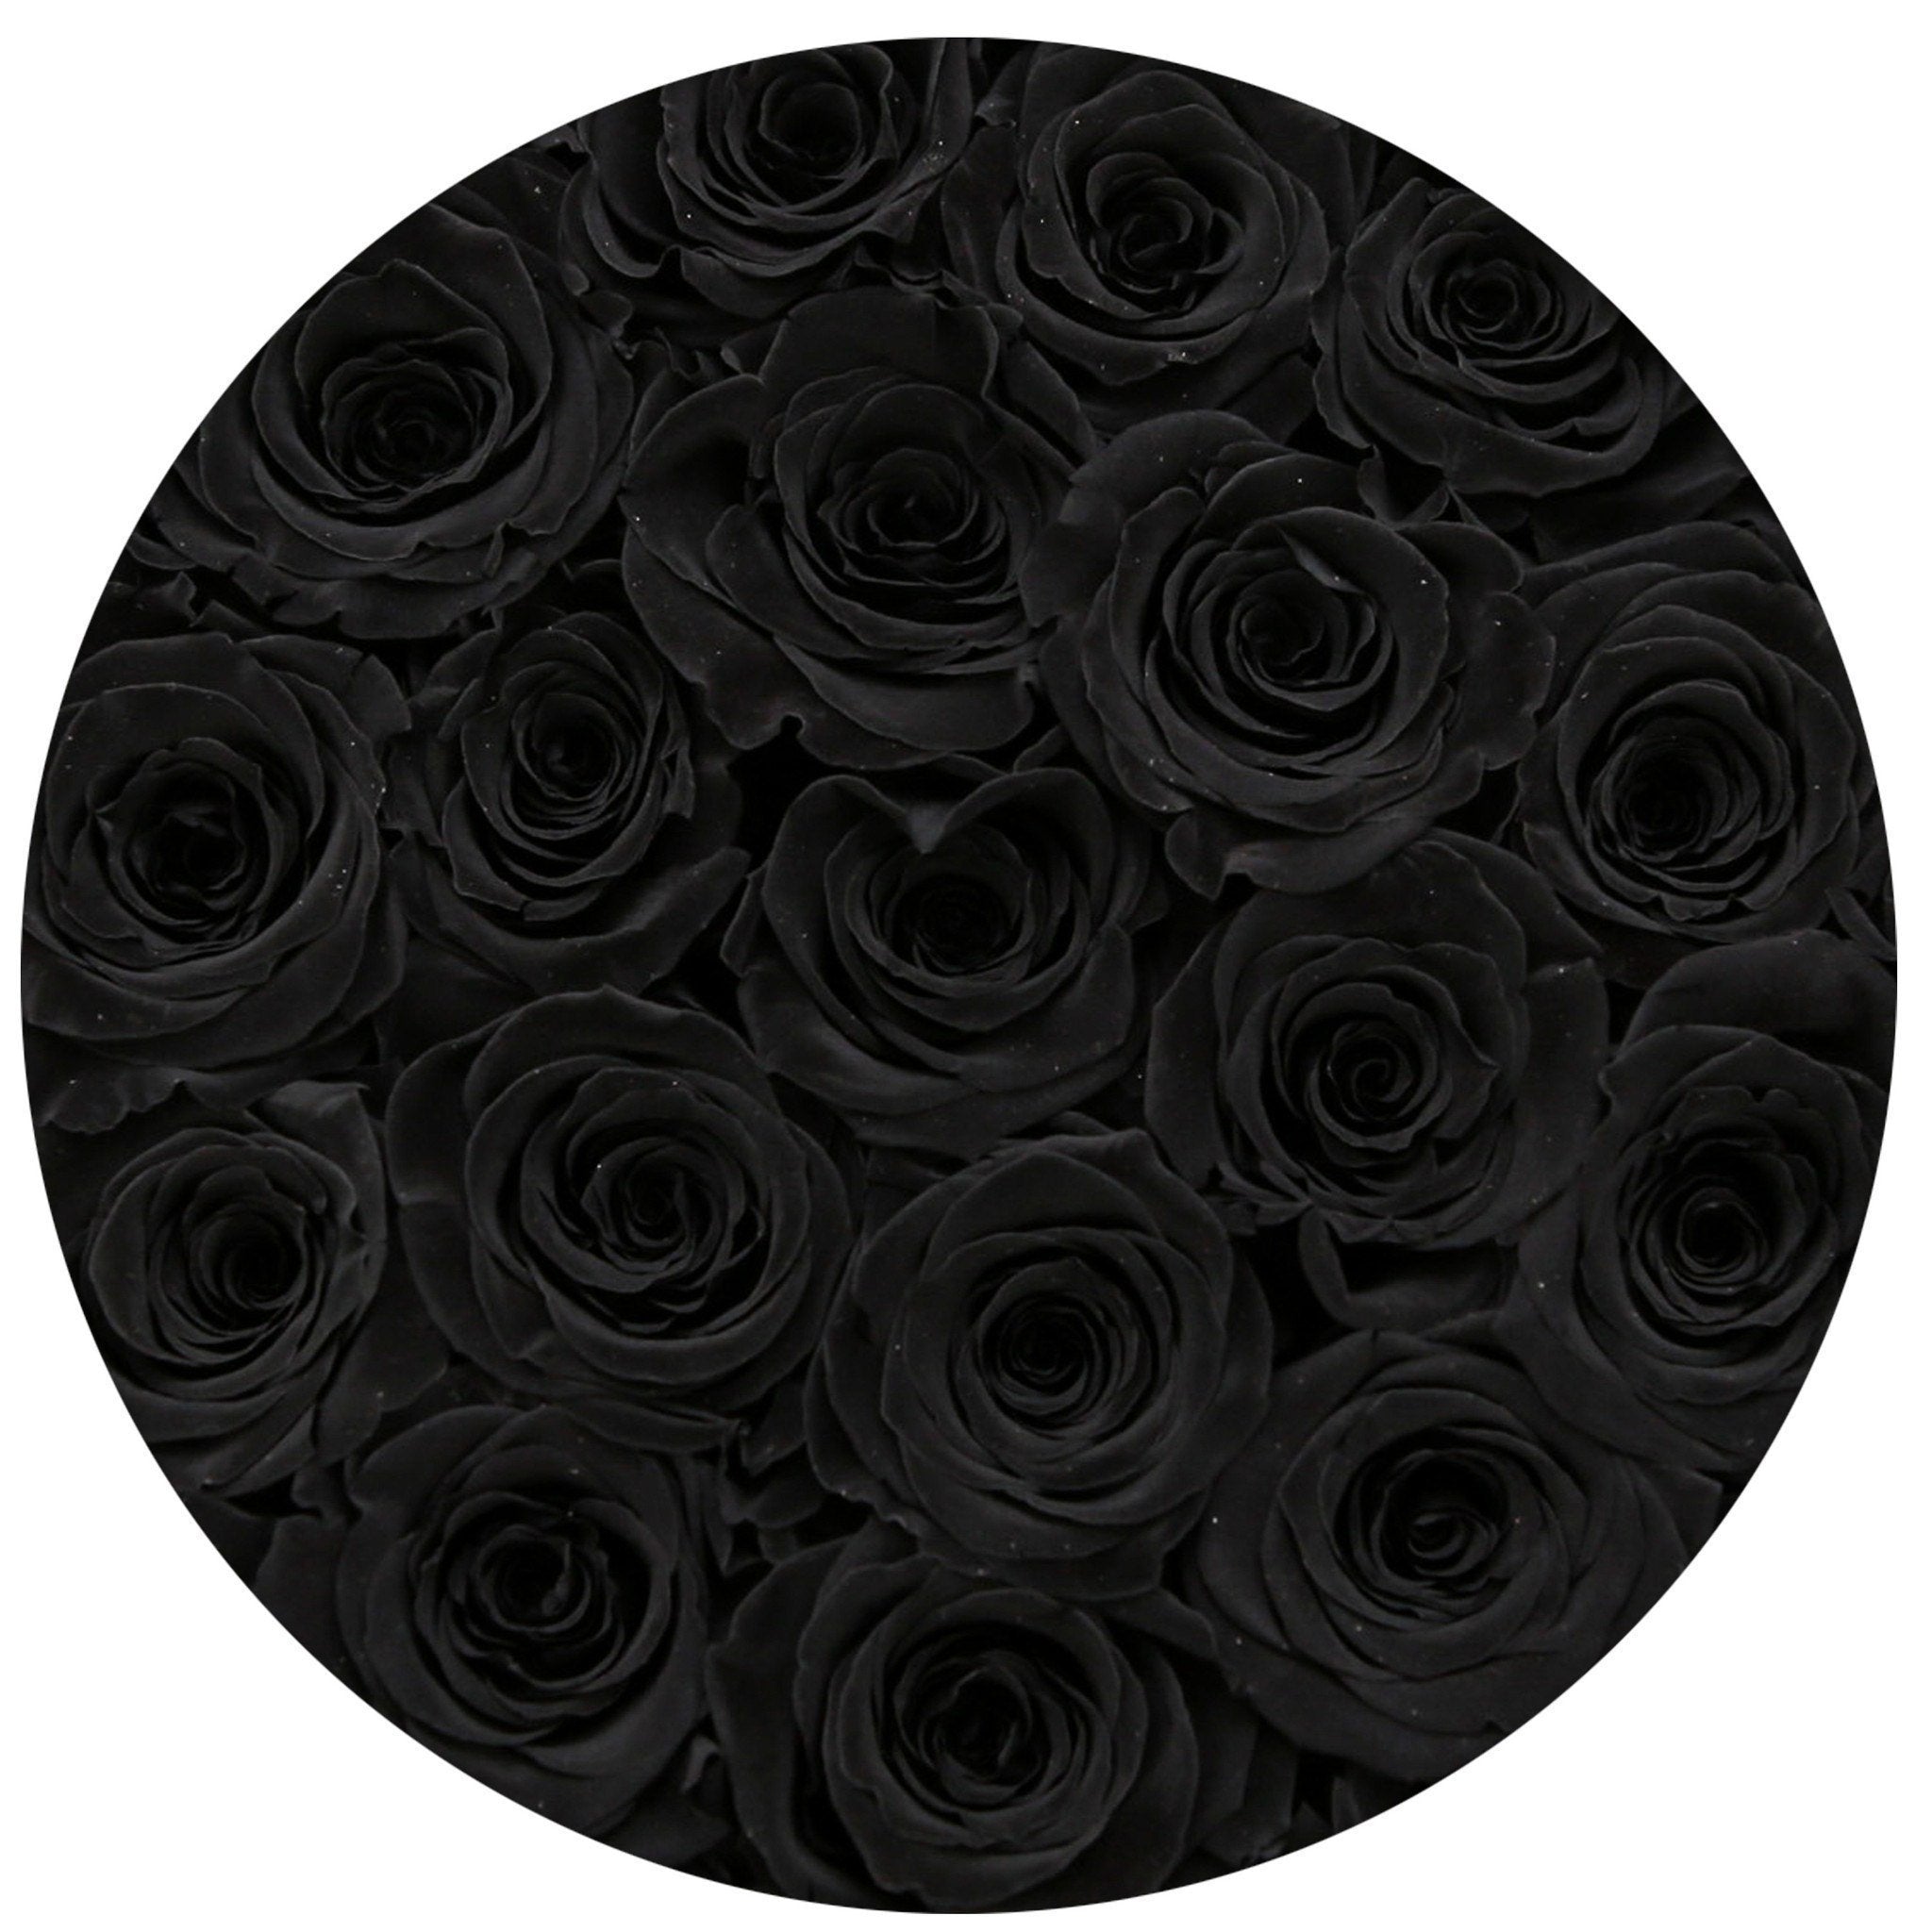 classic round box - "LOVE" - black roses black eternity roses - the million roses